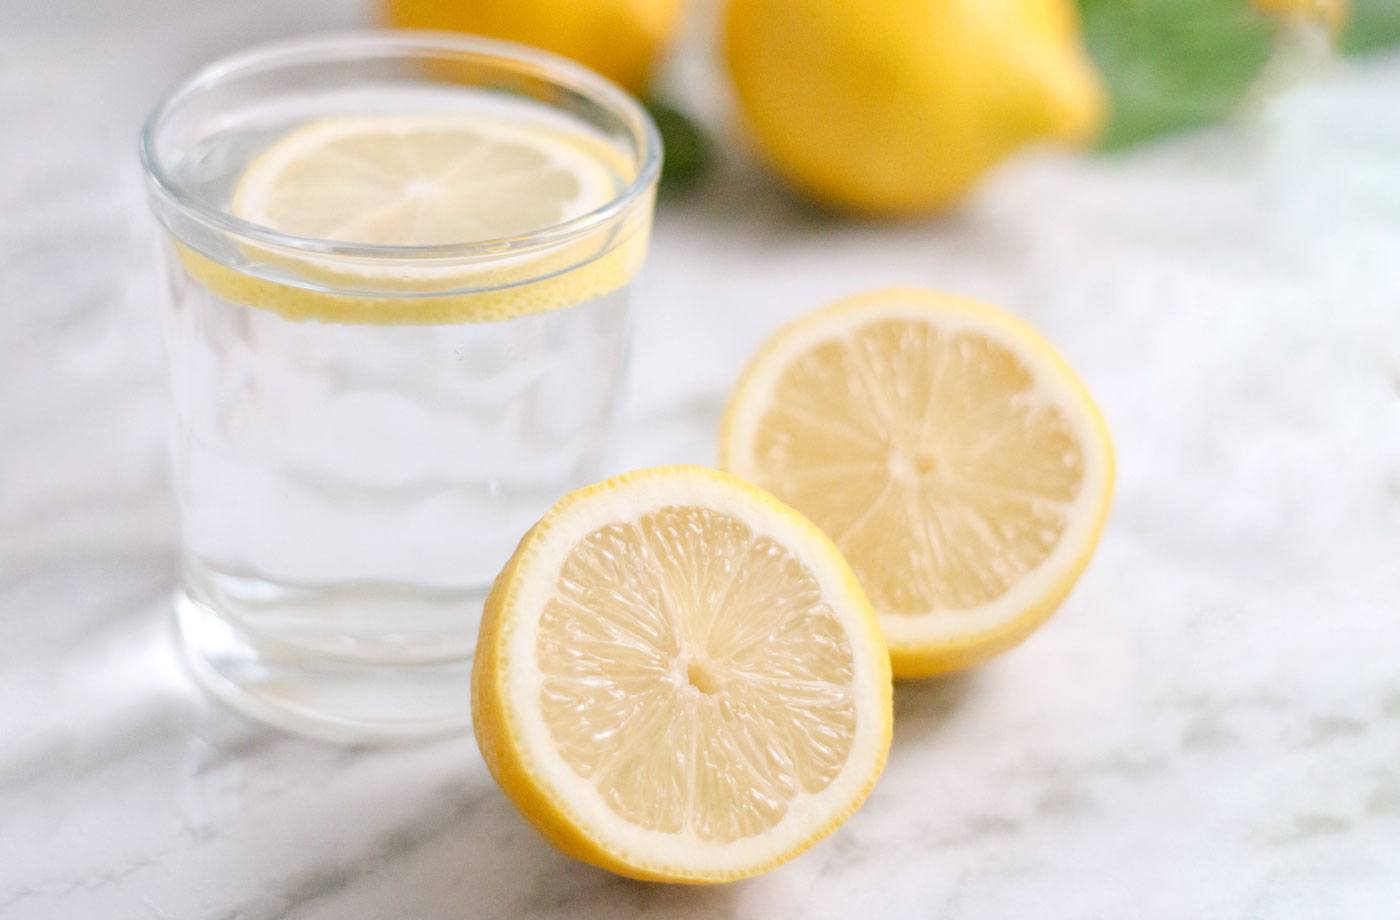 Minum Air Lemon Tiap Pagi, Supaya Lemak di Perut Nggak Ada Lagi